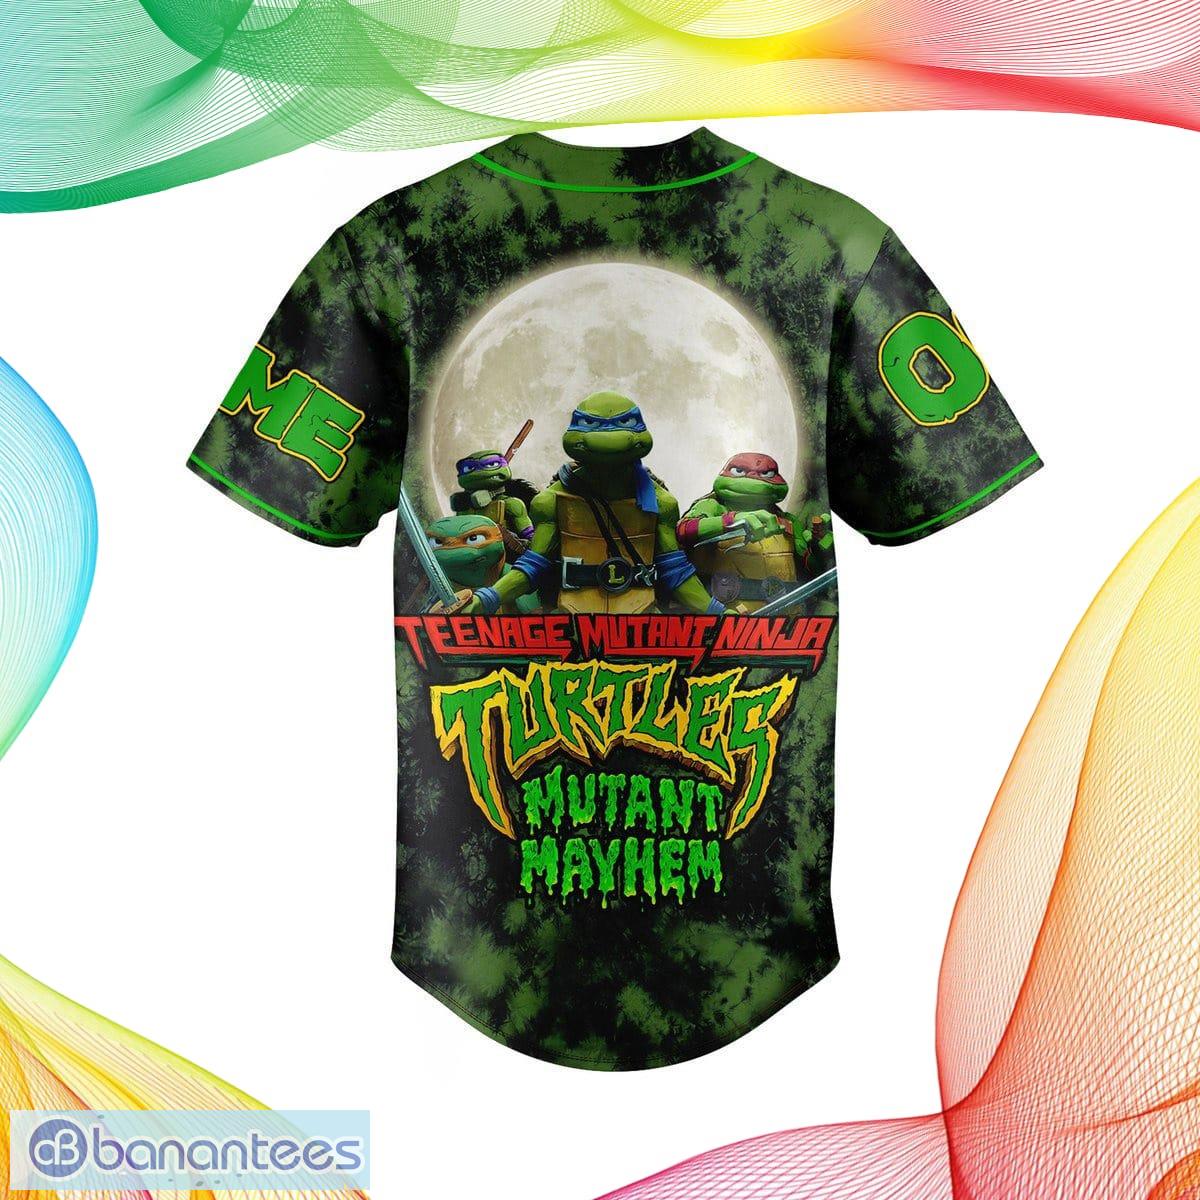 Teenage Mutant Ninja Turtles Numbered 1-9 Monogrammed/Personalized Shirt